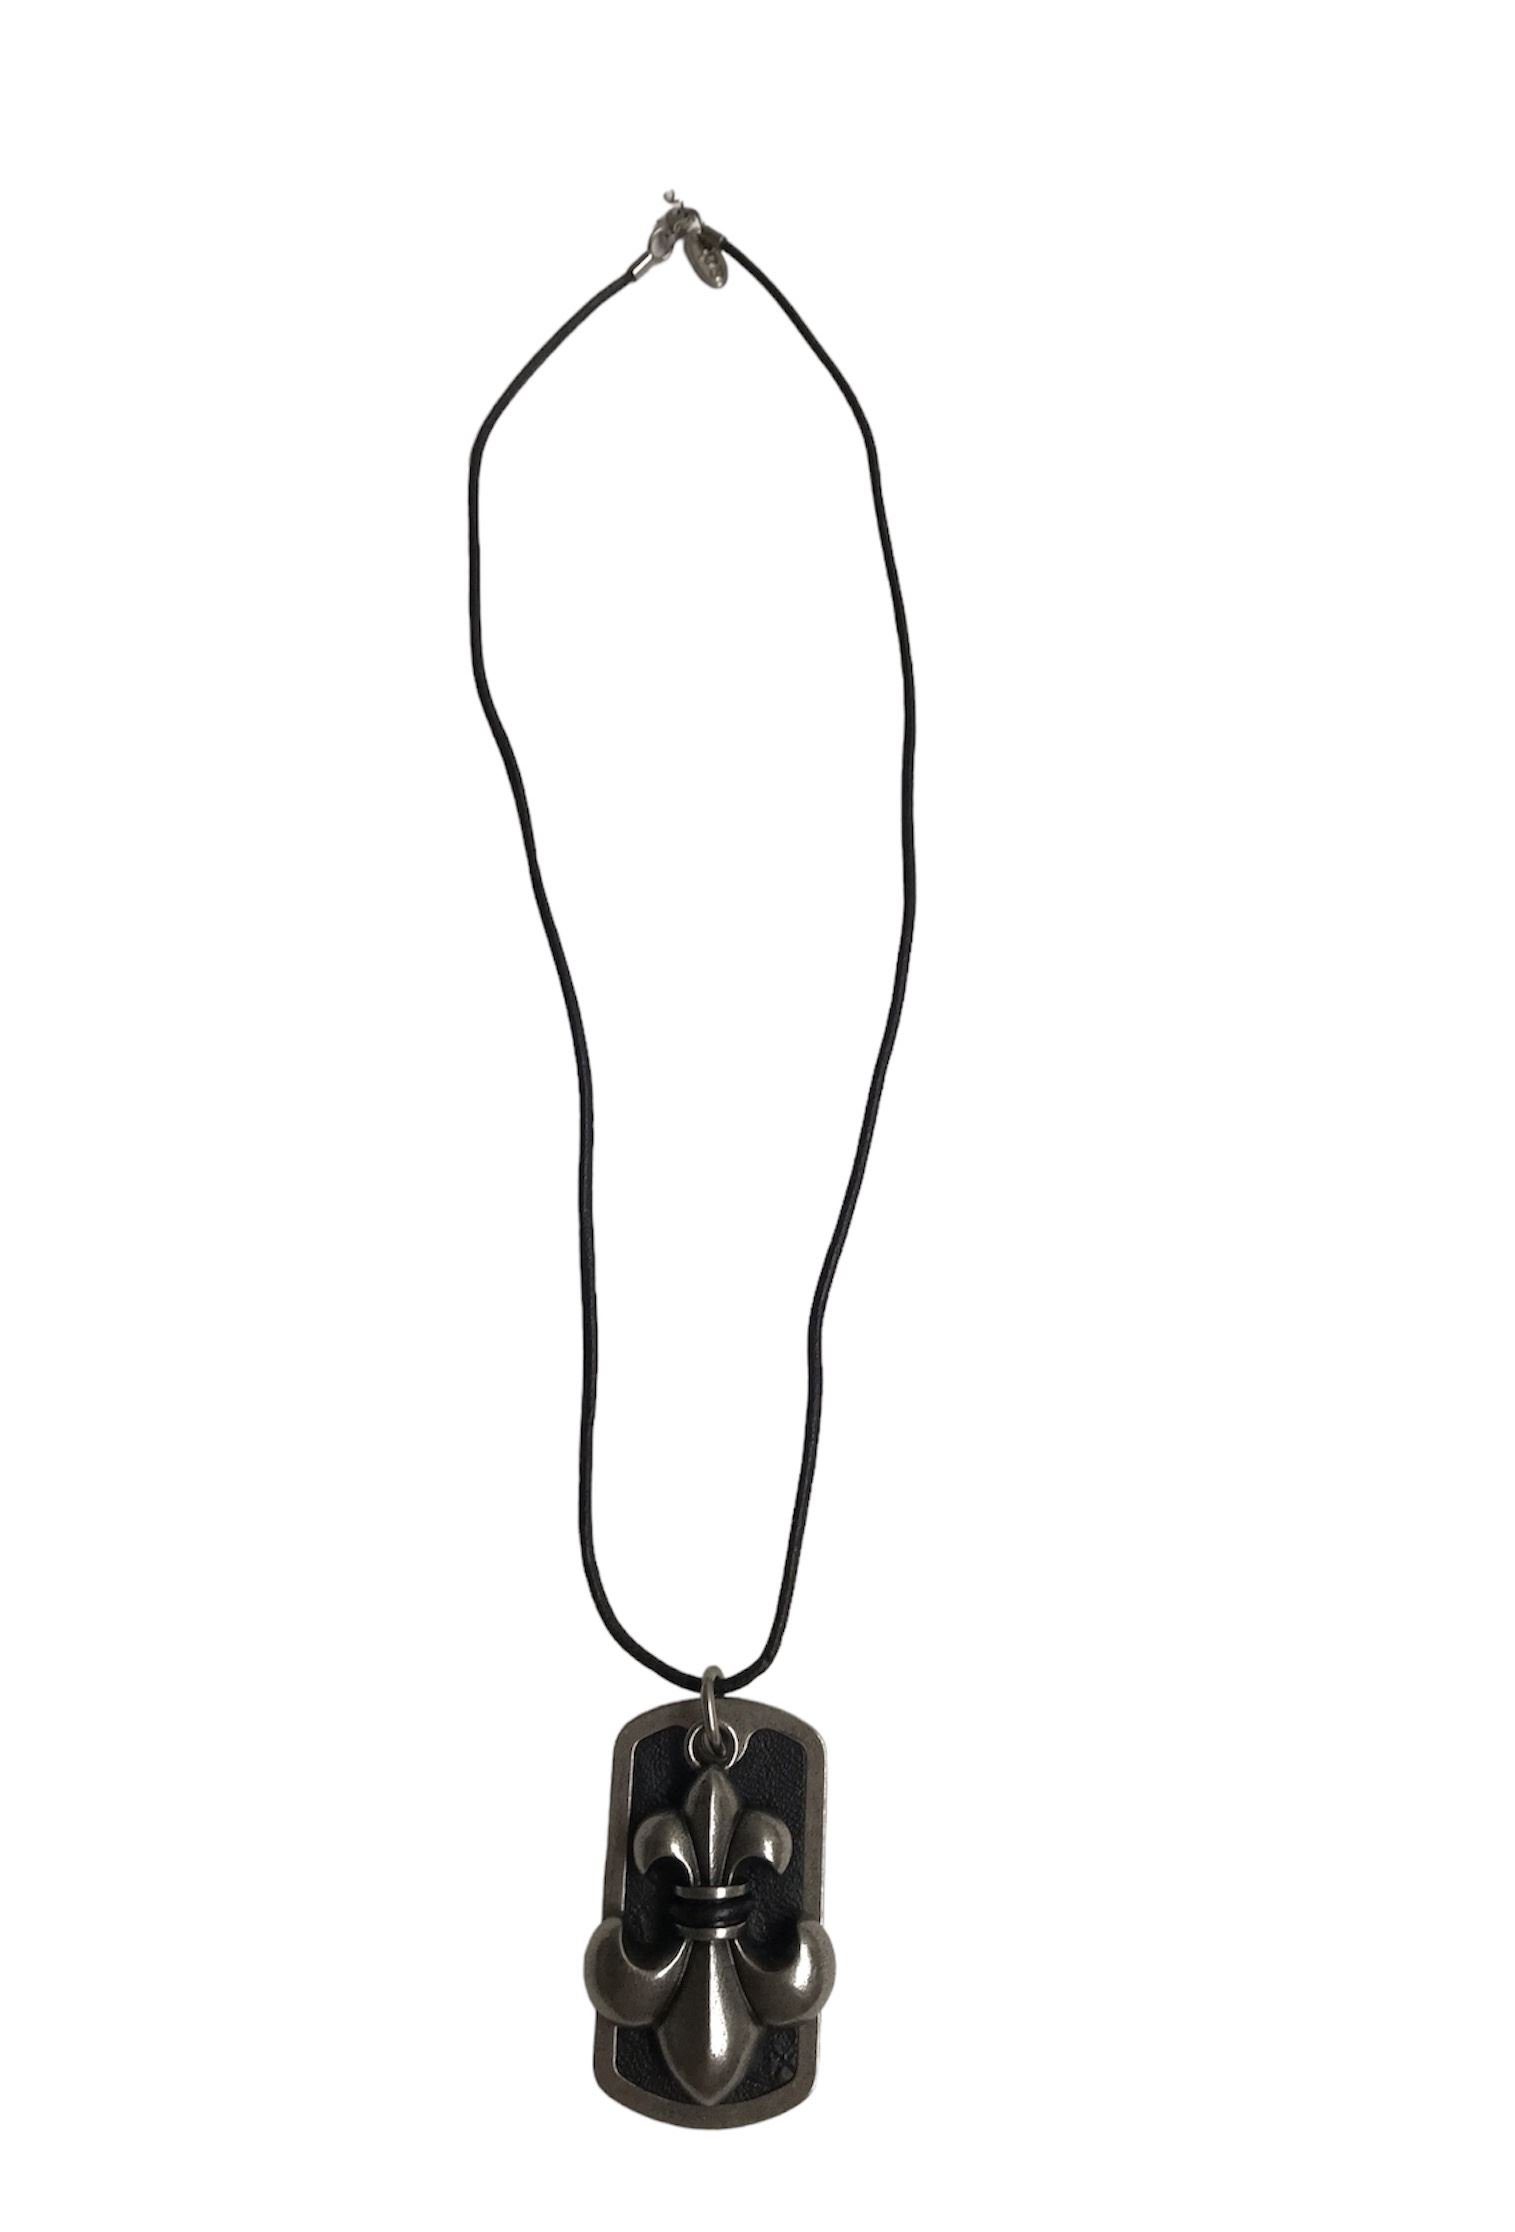 Lederkette altsilber-look, 60cm nordischer Mittelalter-Style edc TAG Esprit ROCKA LILY ECNL-10016.A.60, Collier by edc